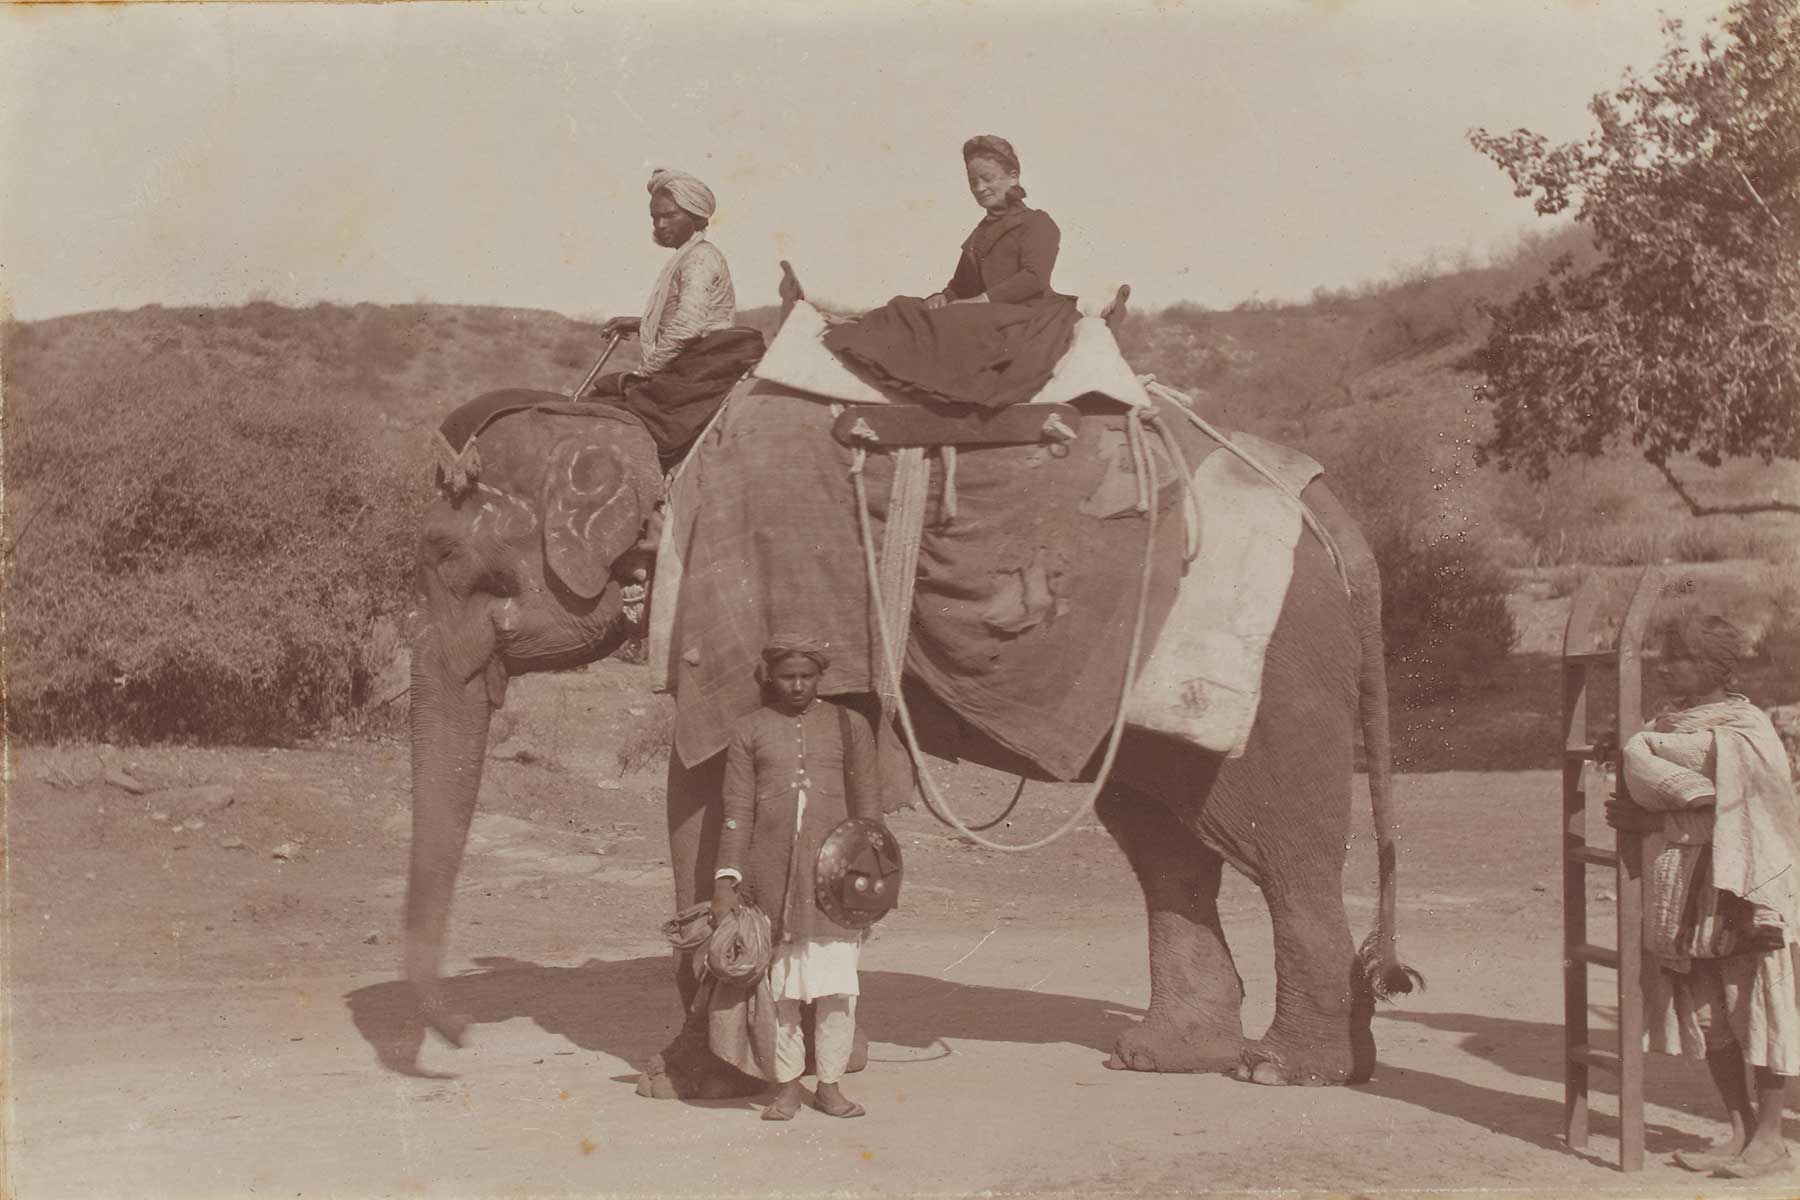 Woman sitting on elephant, Jeypur February 1891